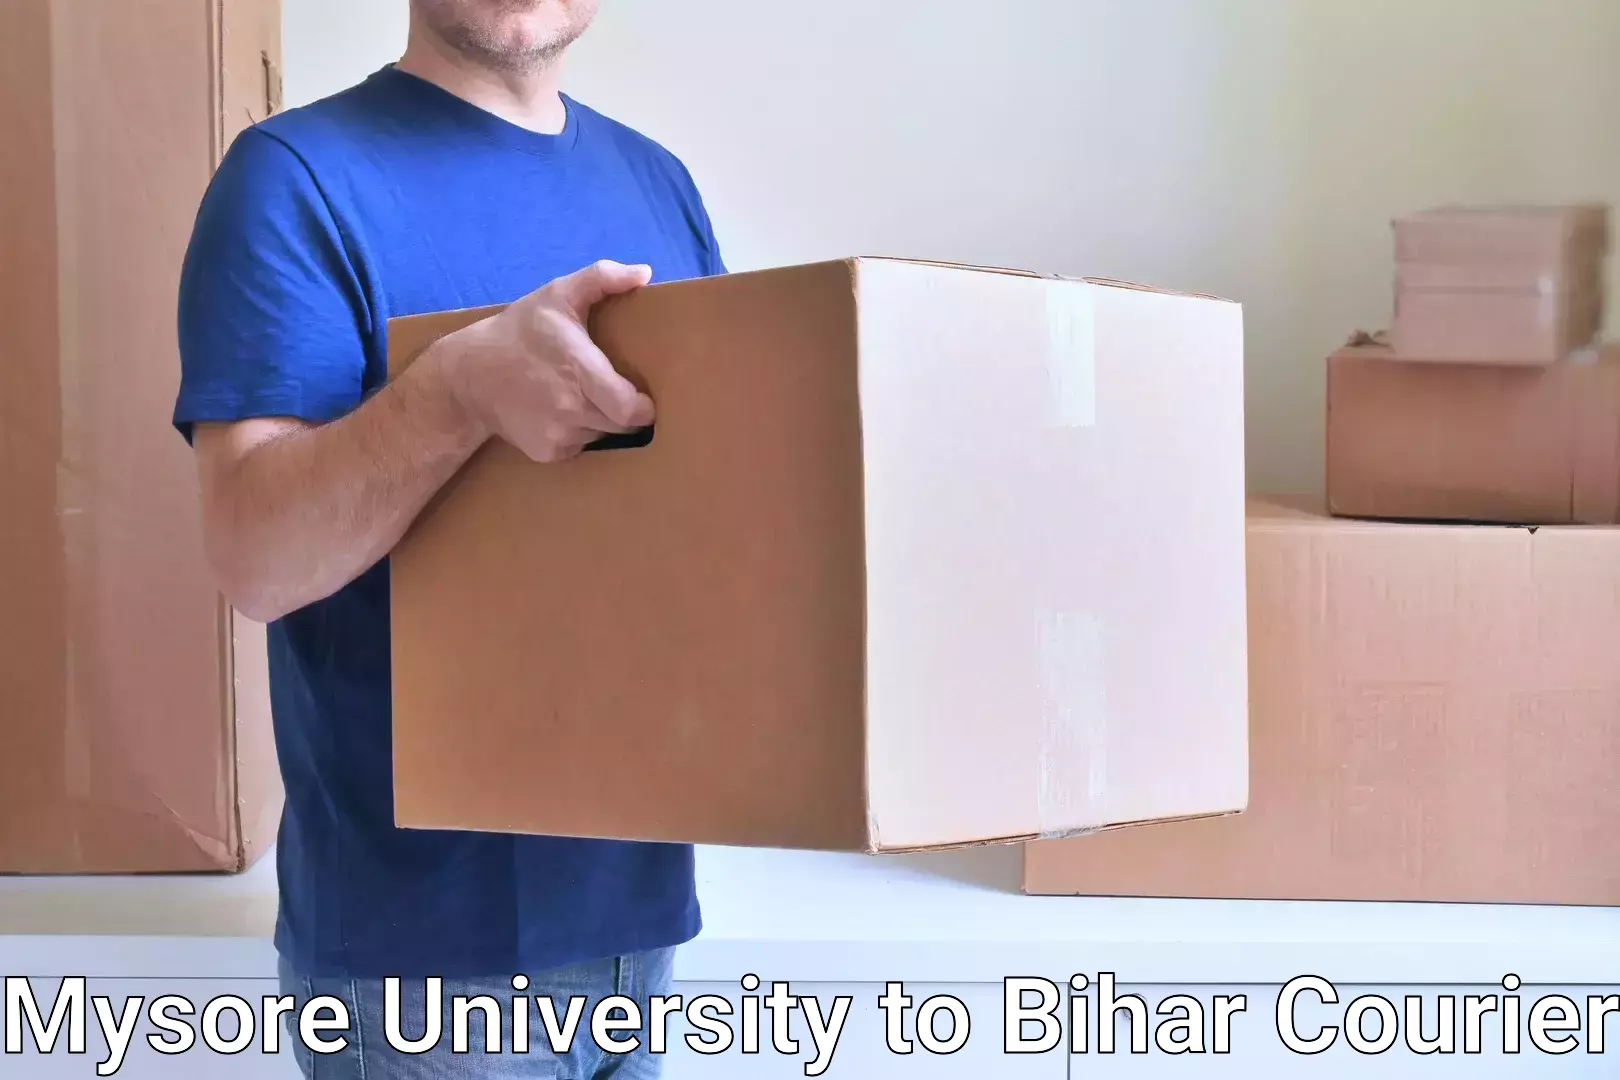 Express mail service Mysore University to Bihar